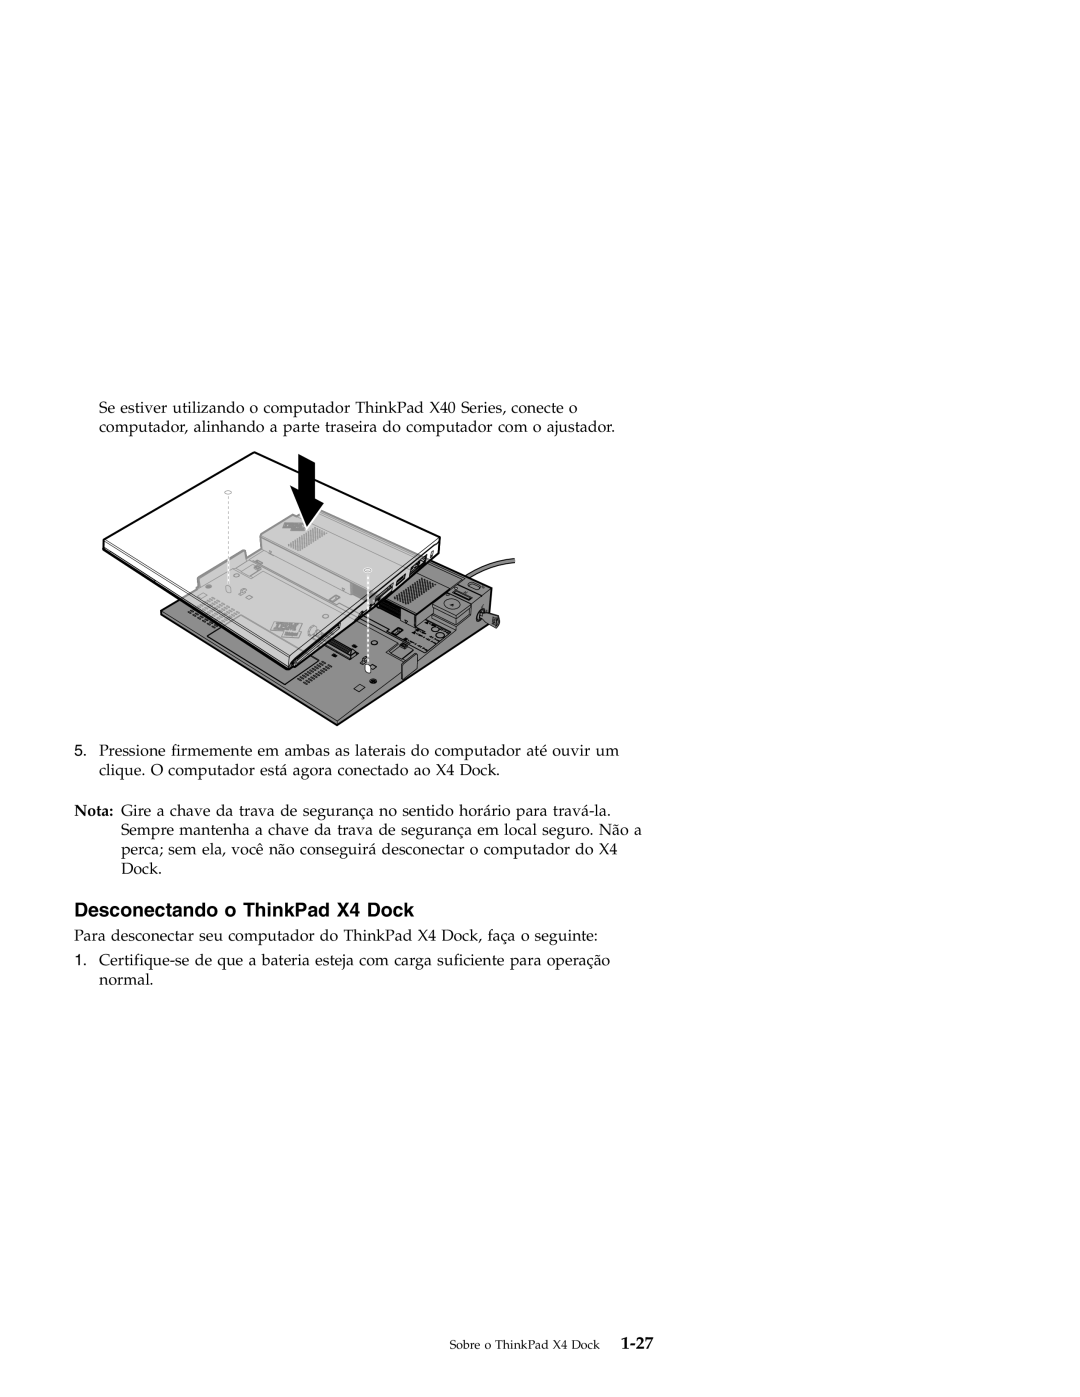 IBM manual Desconectando o ThinkPad X4 Dock 